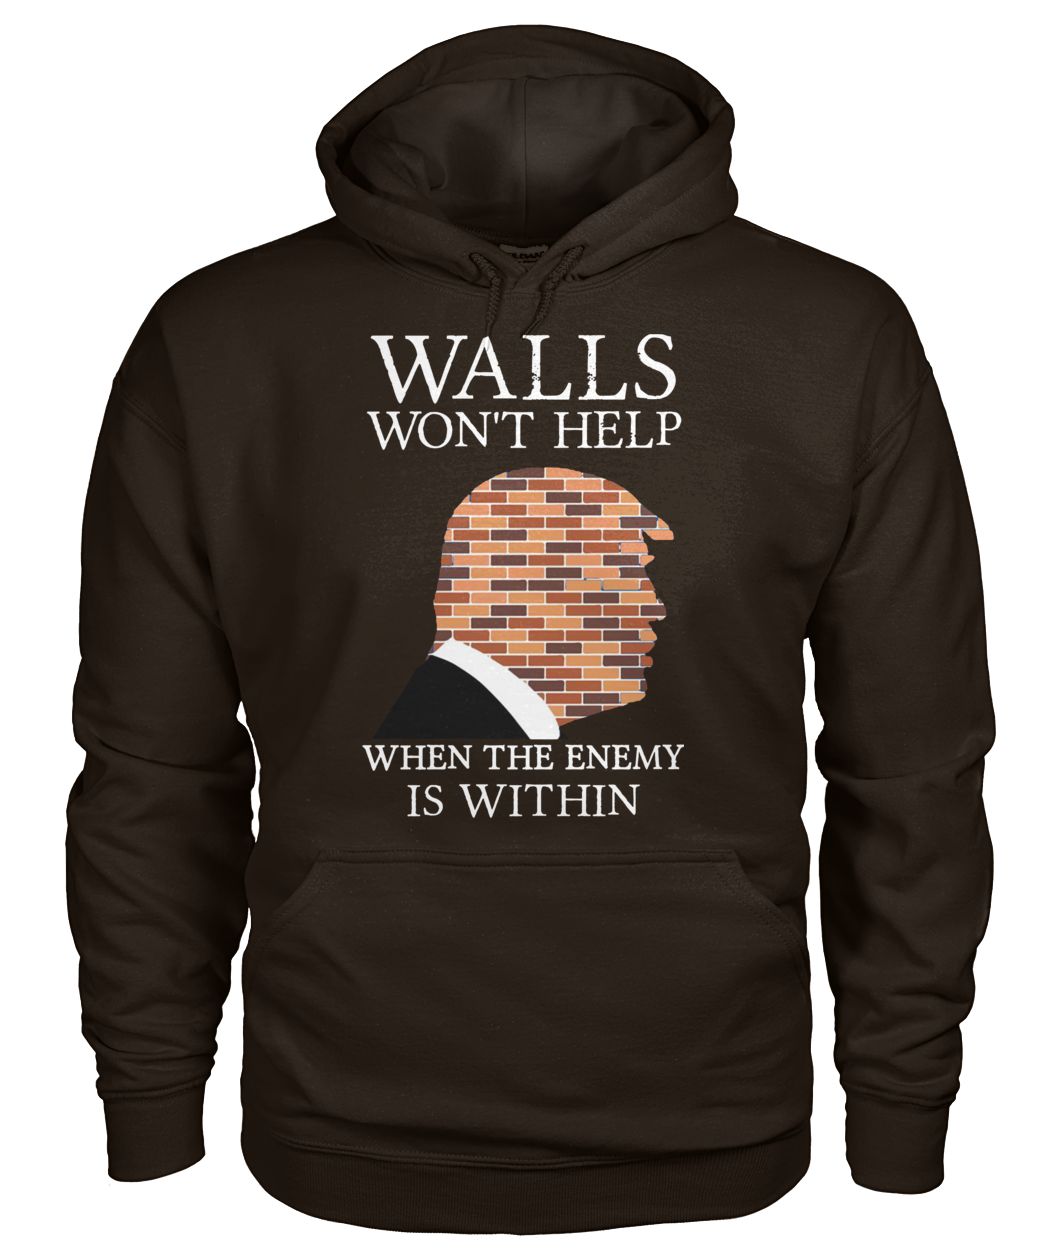 Trump walls won't help when the enemy is within gildan hoodie